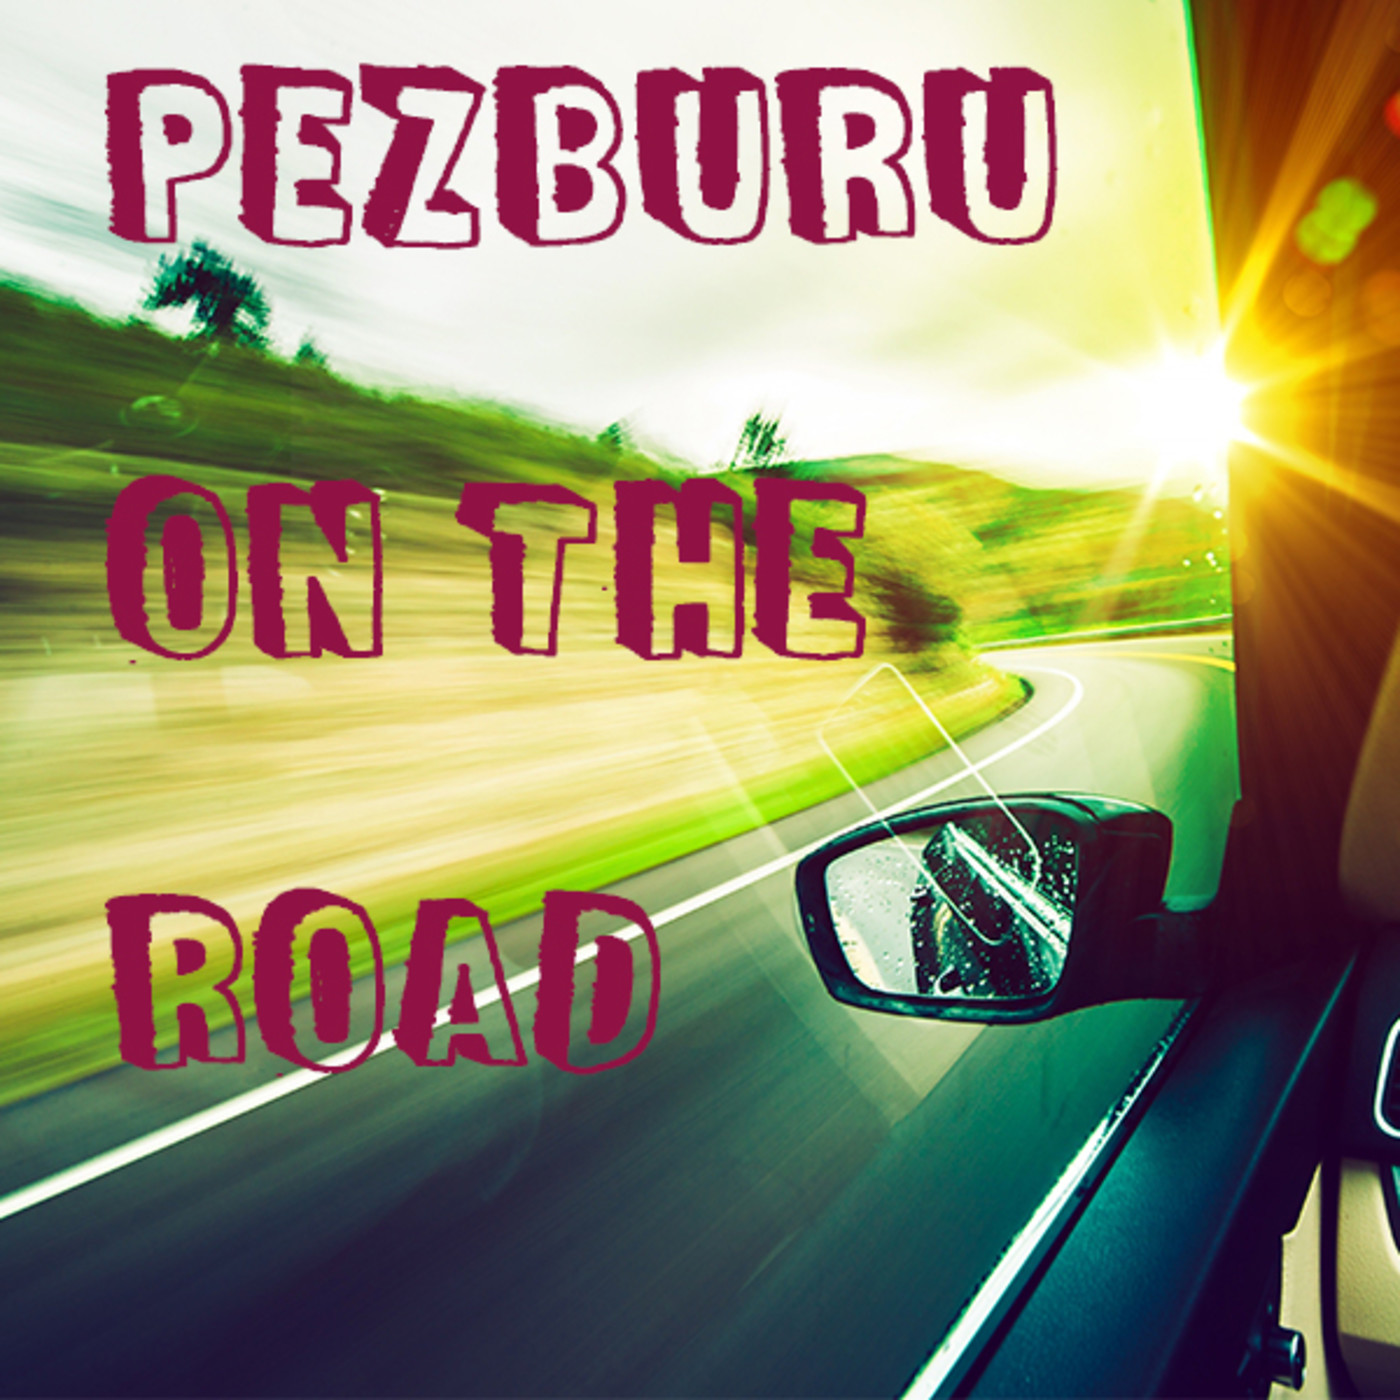 Pezburu on the road